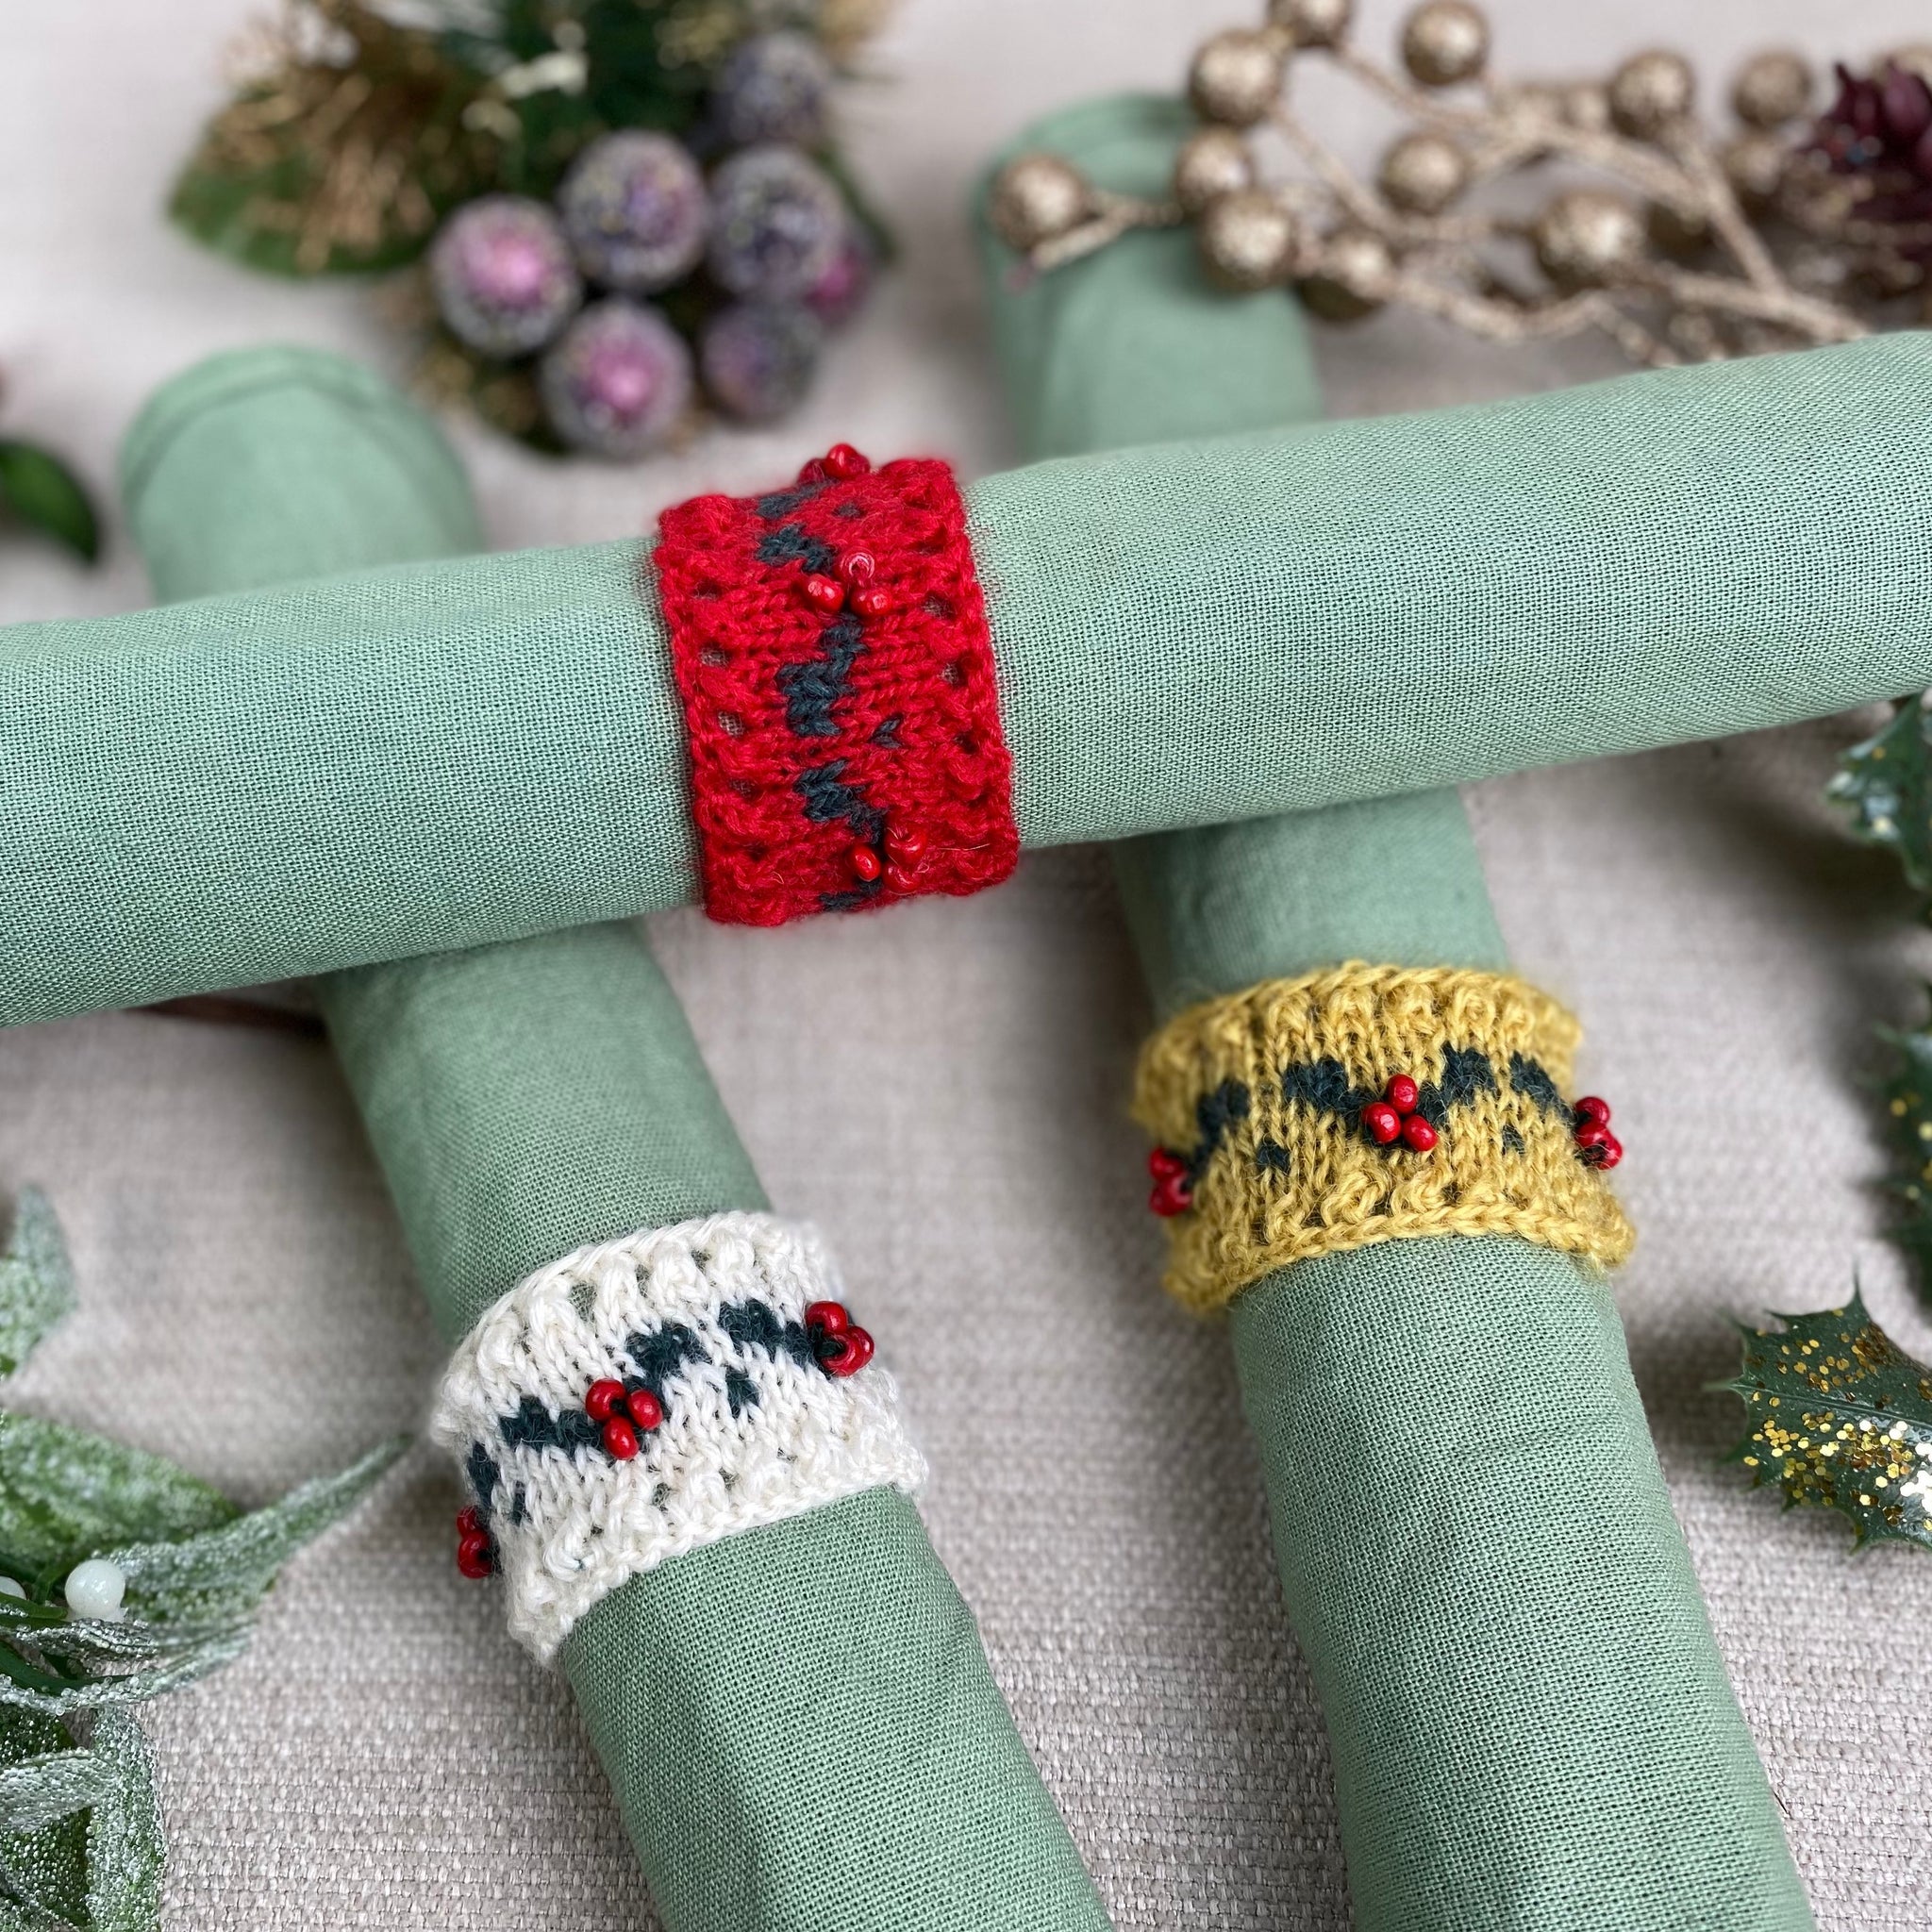 Holly Berry Napkin Ring Holders Knitting Kit (makes 6)